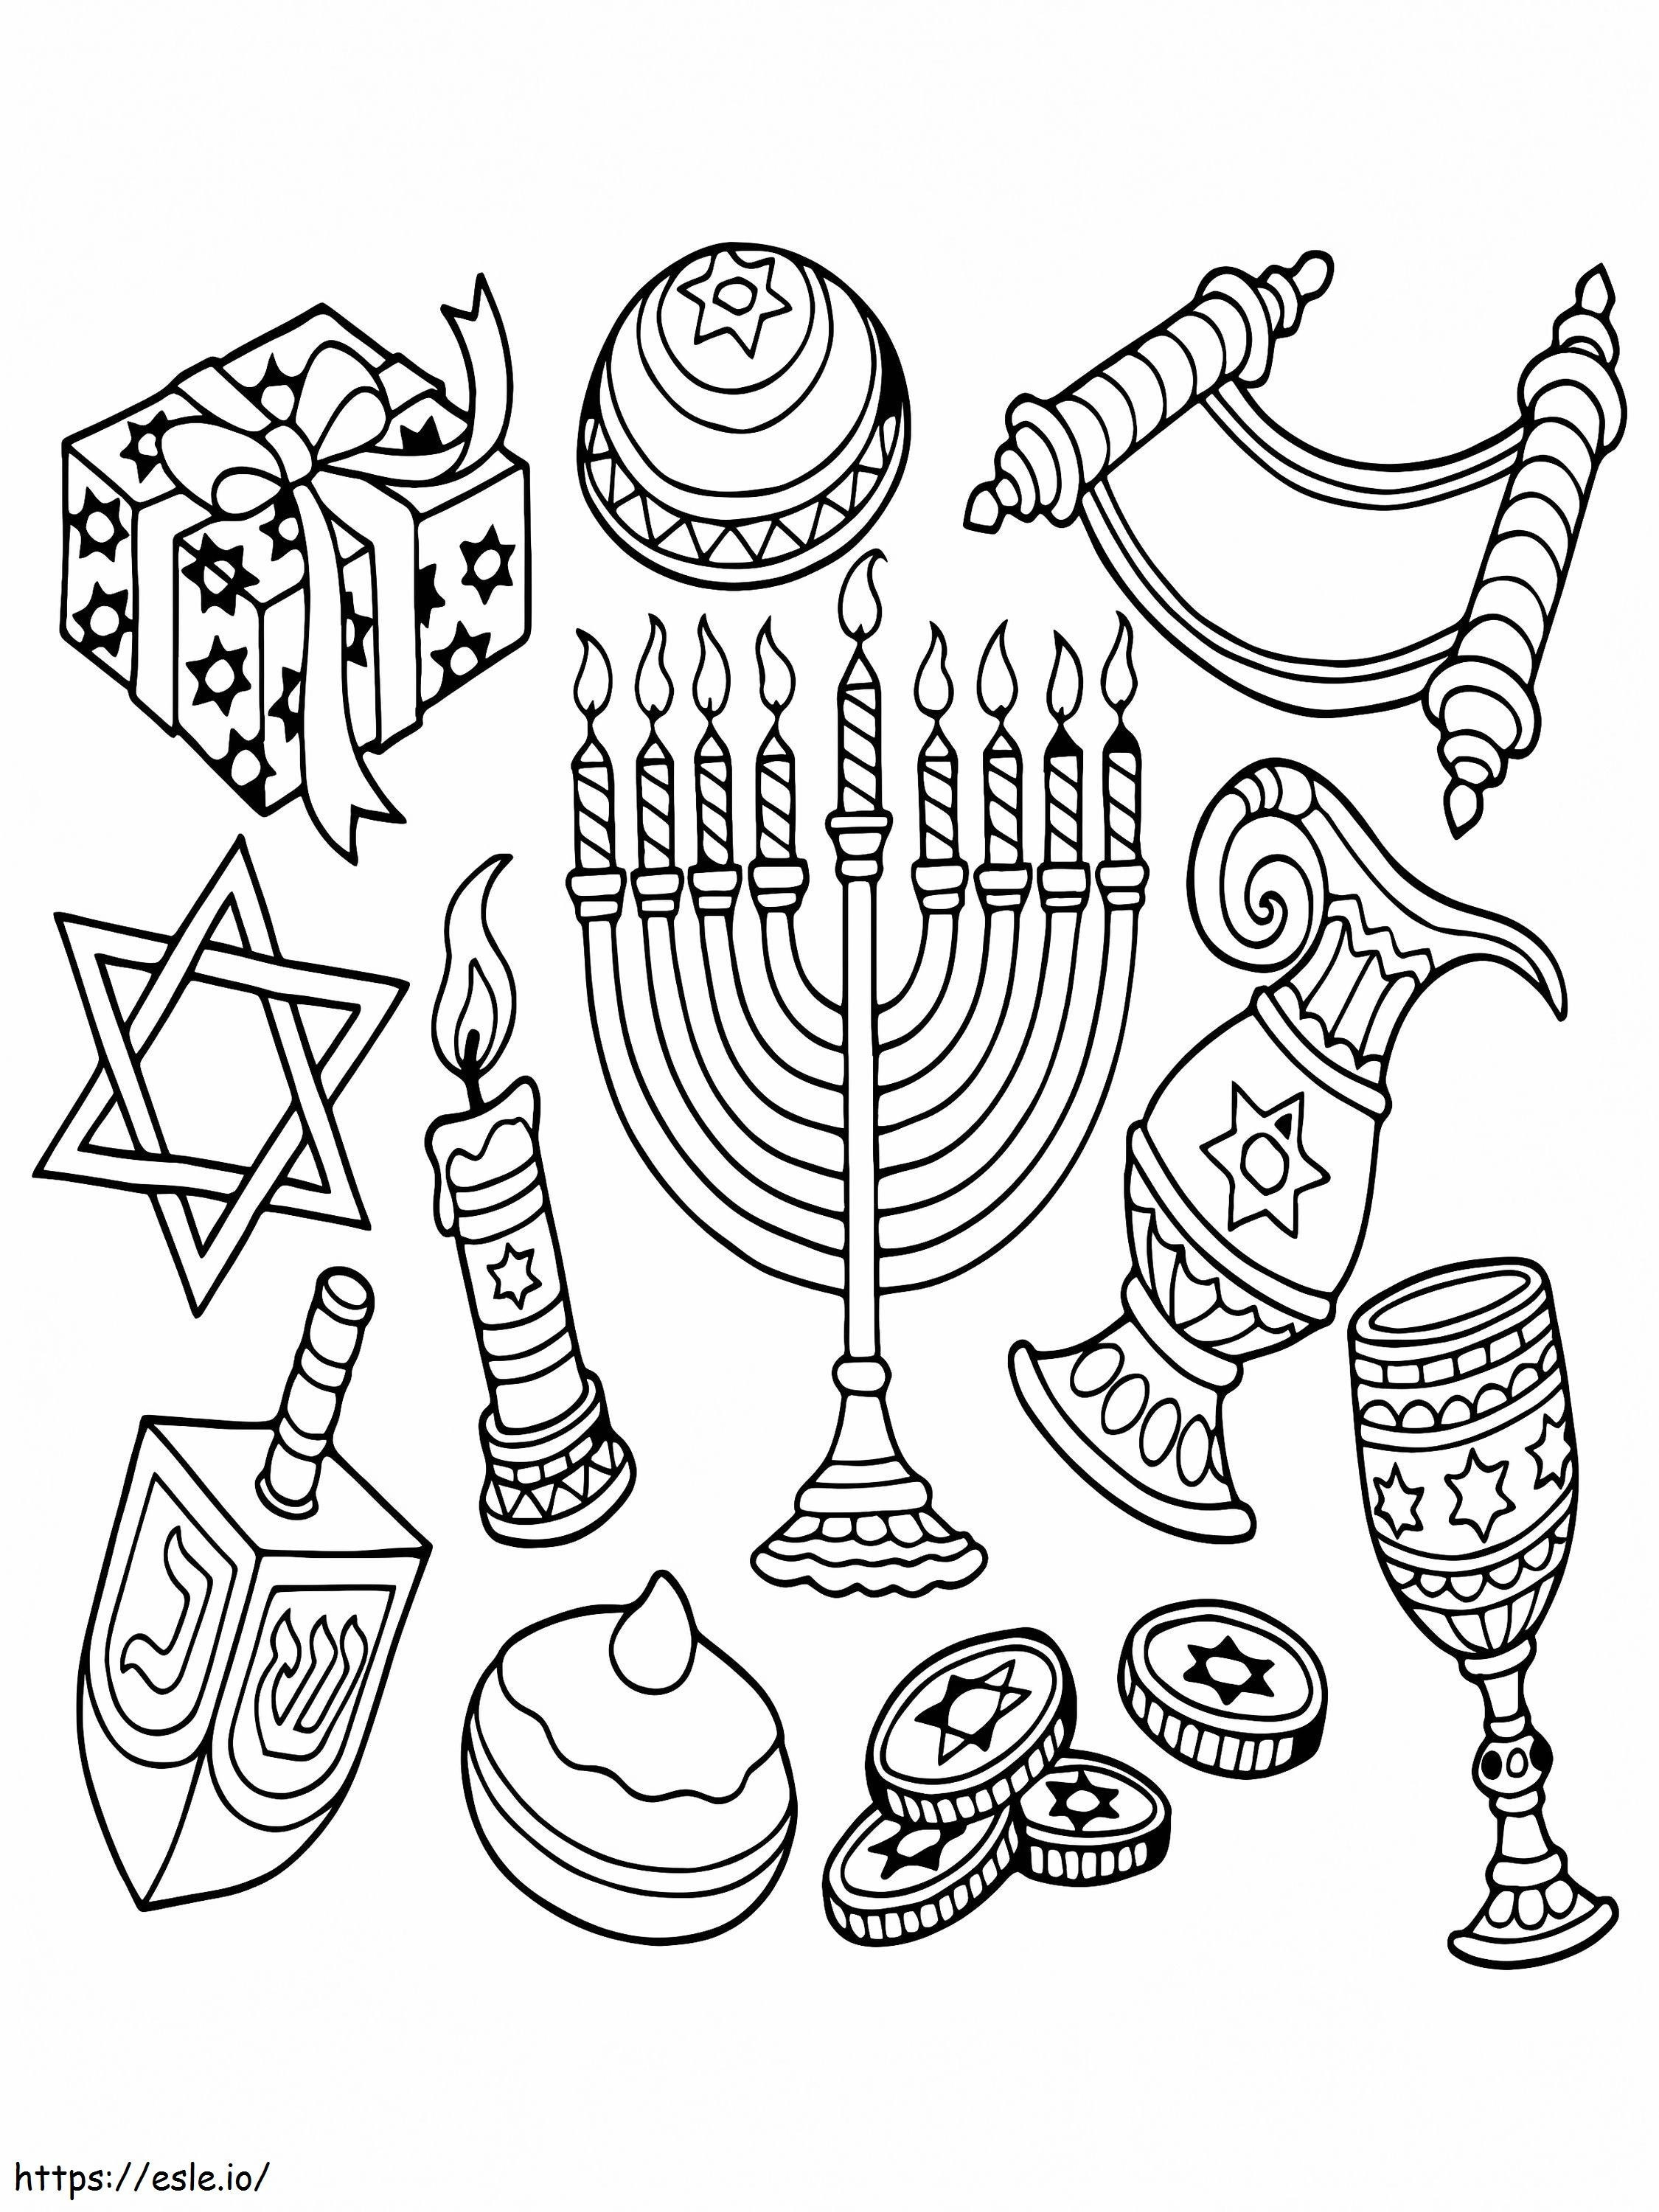 Simboli di Hanukkah da colorare